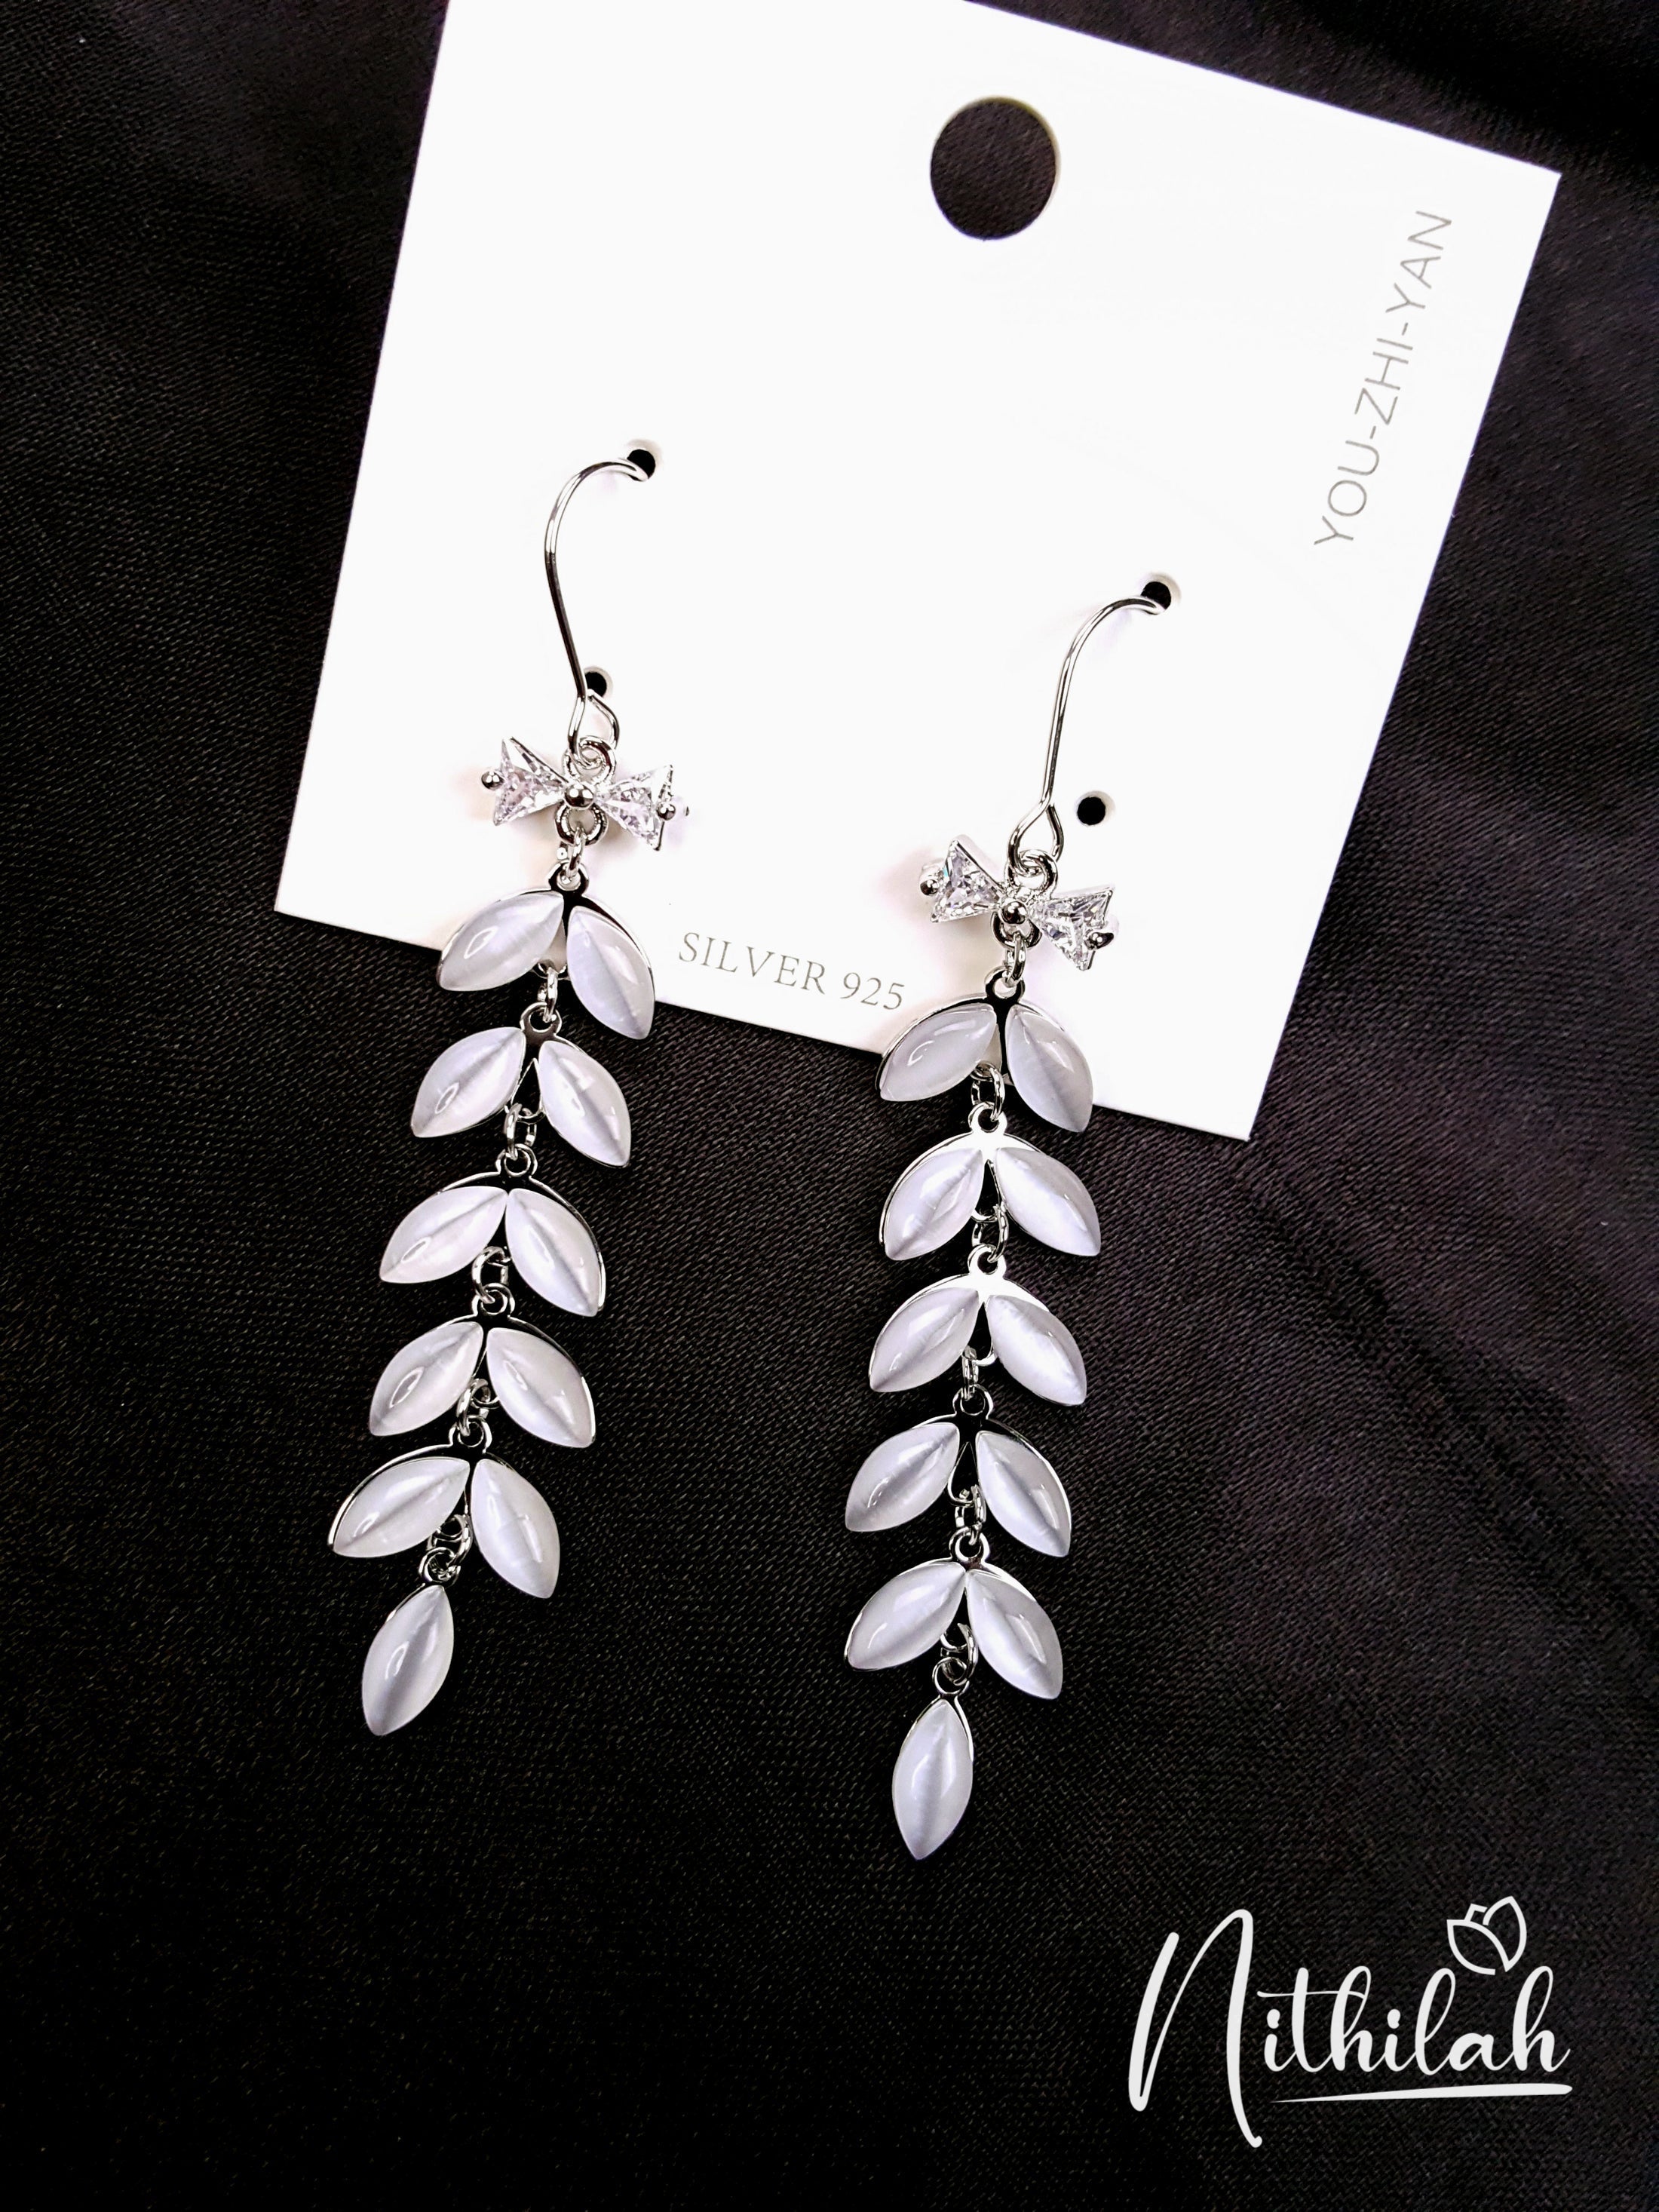 Buy Imitation Jewellery Girlish Earrings Silver Leaves Stalk NPJE107 Online